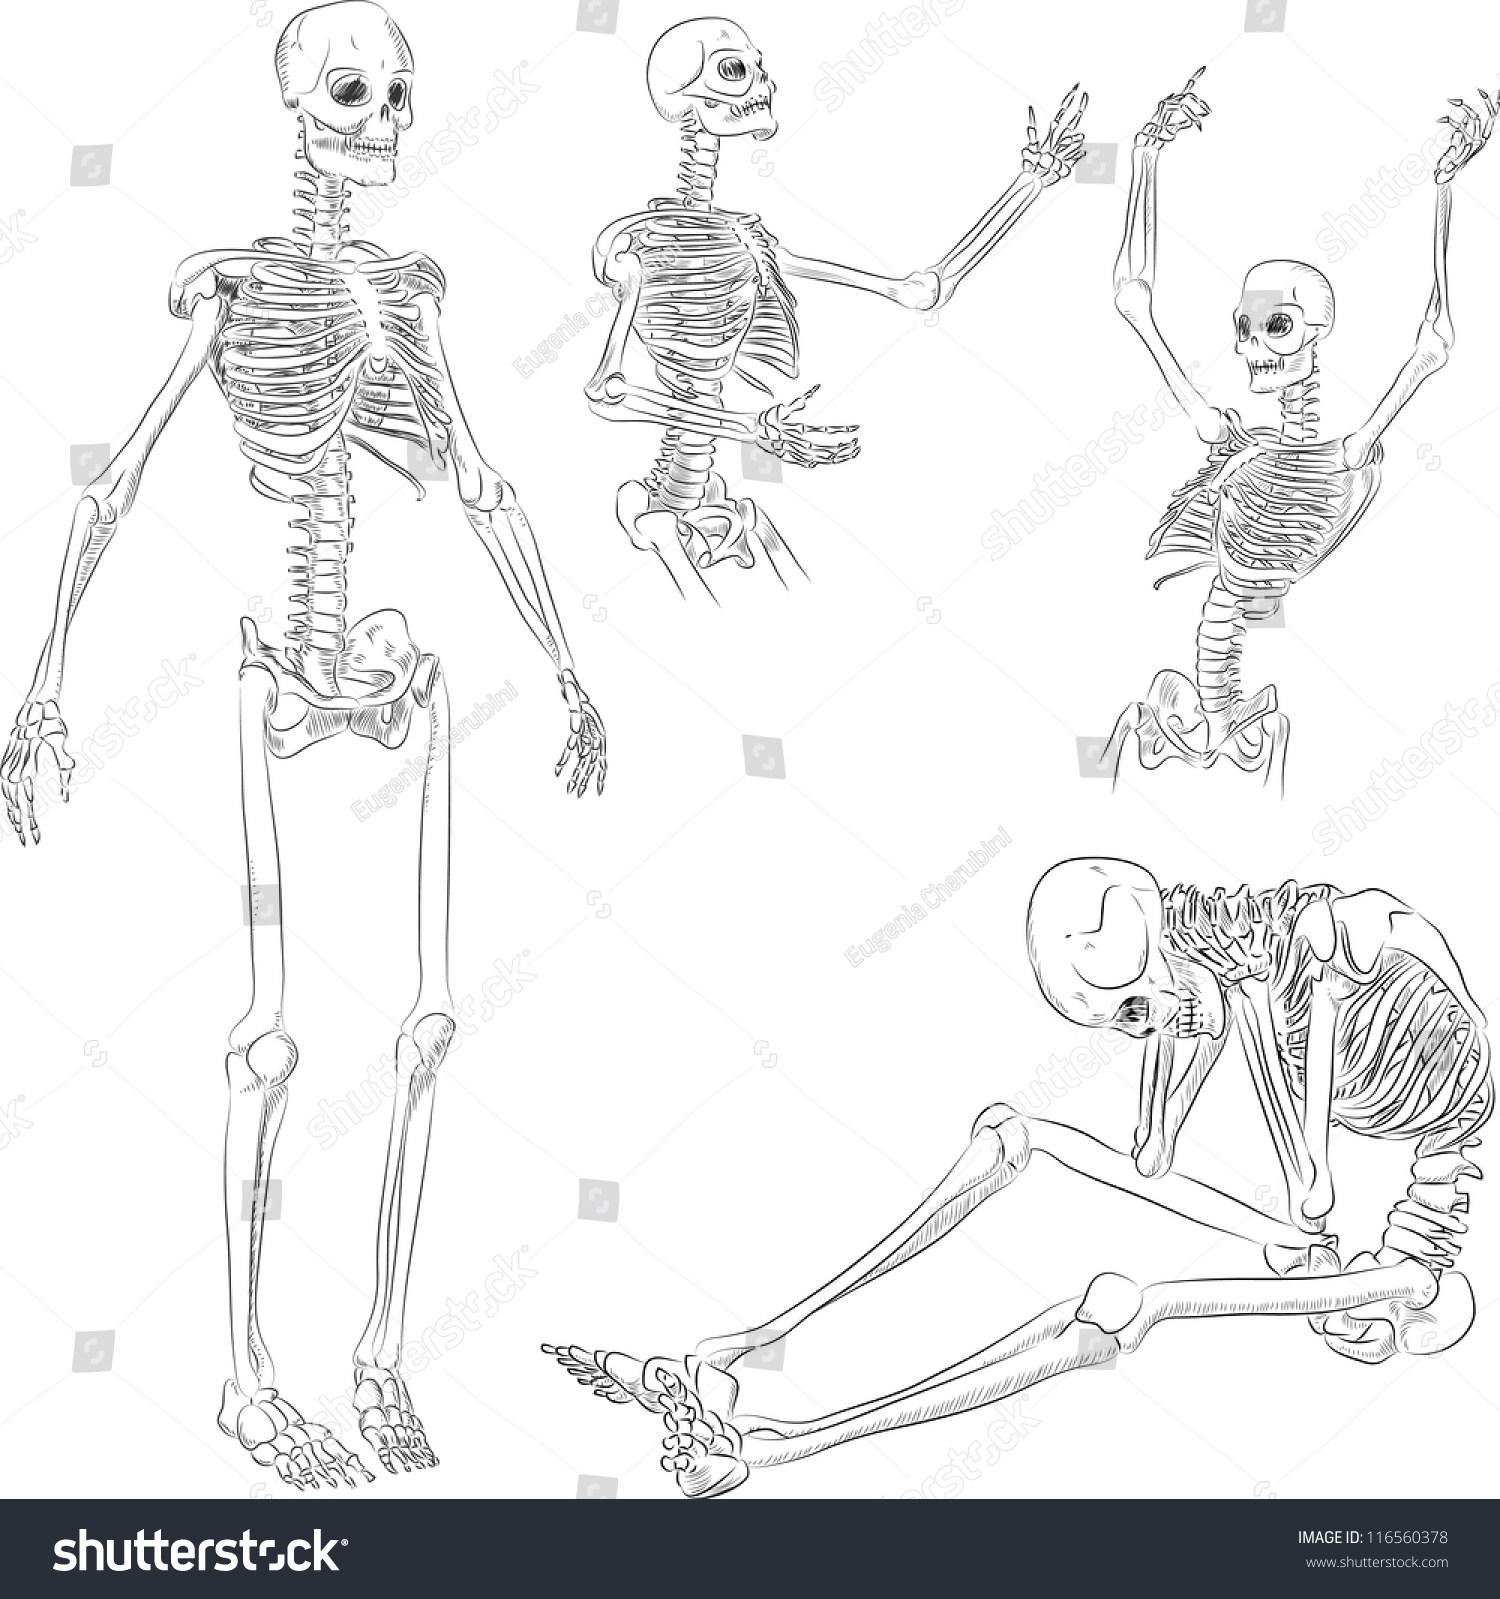 Human Skeleton Drawing Several Active Poses Stock Vector 